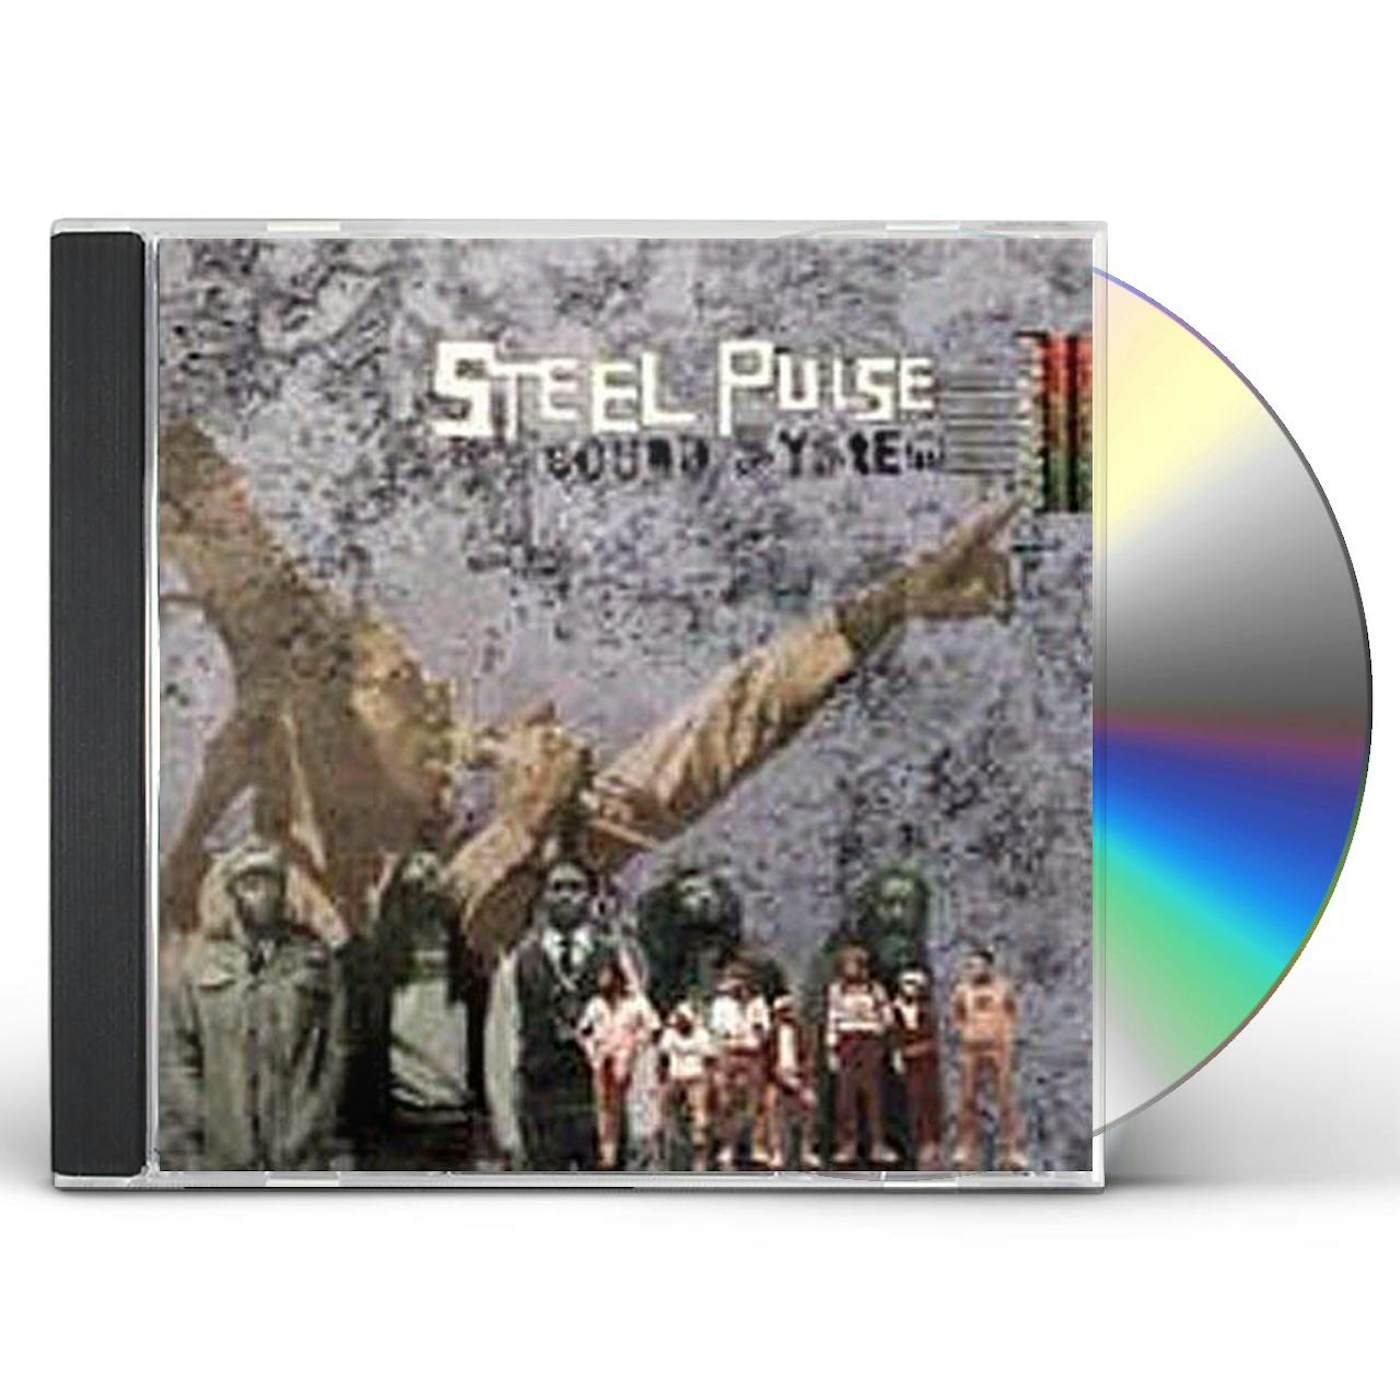 Steel Pulse SOUND SYSTEM: ISLAND ANTHOLOGY CD